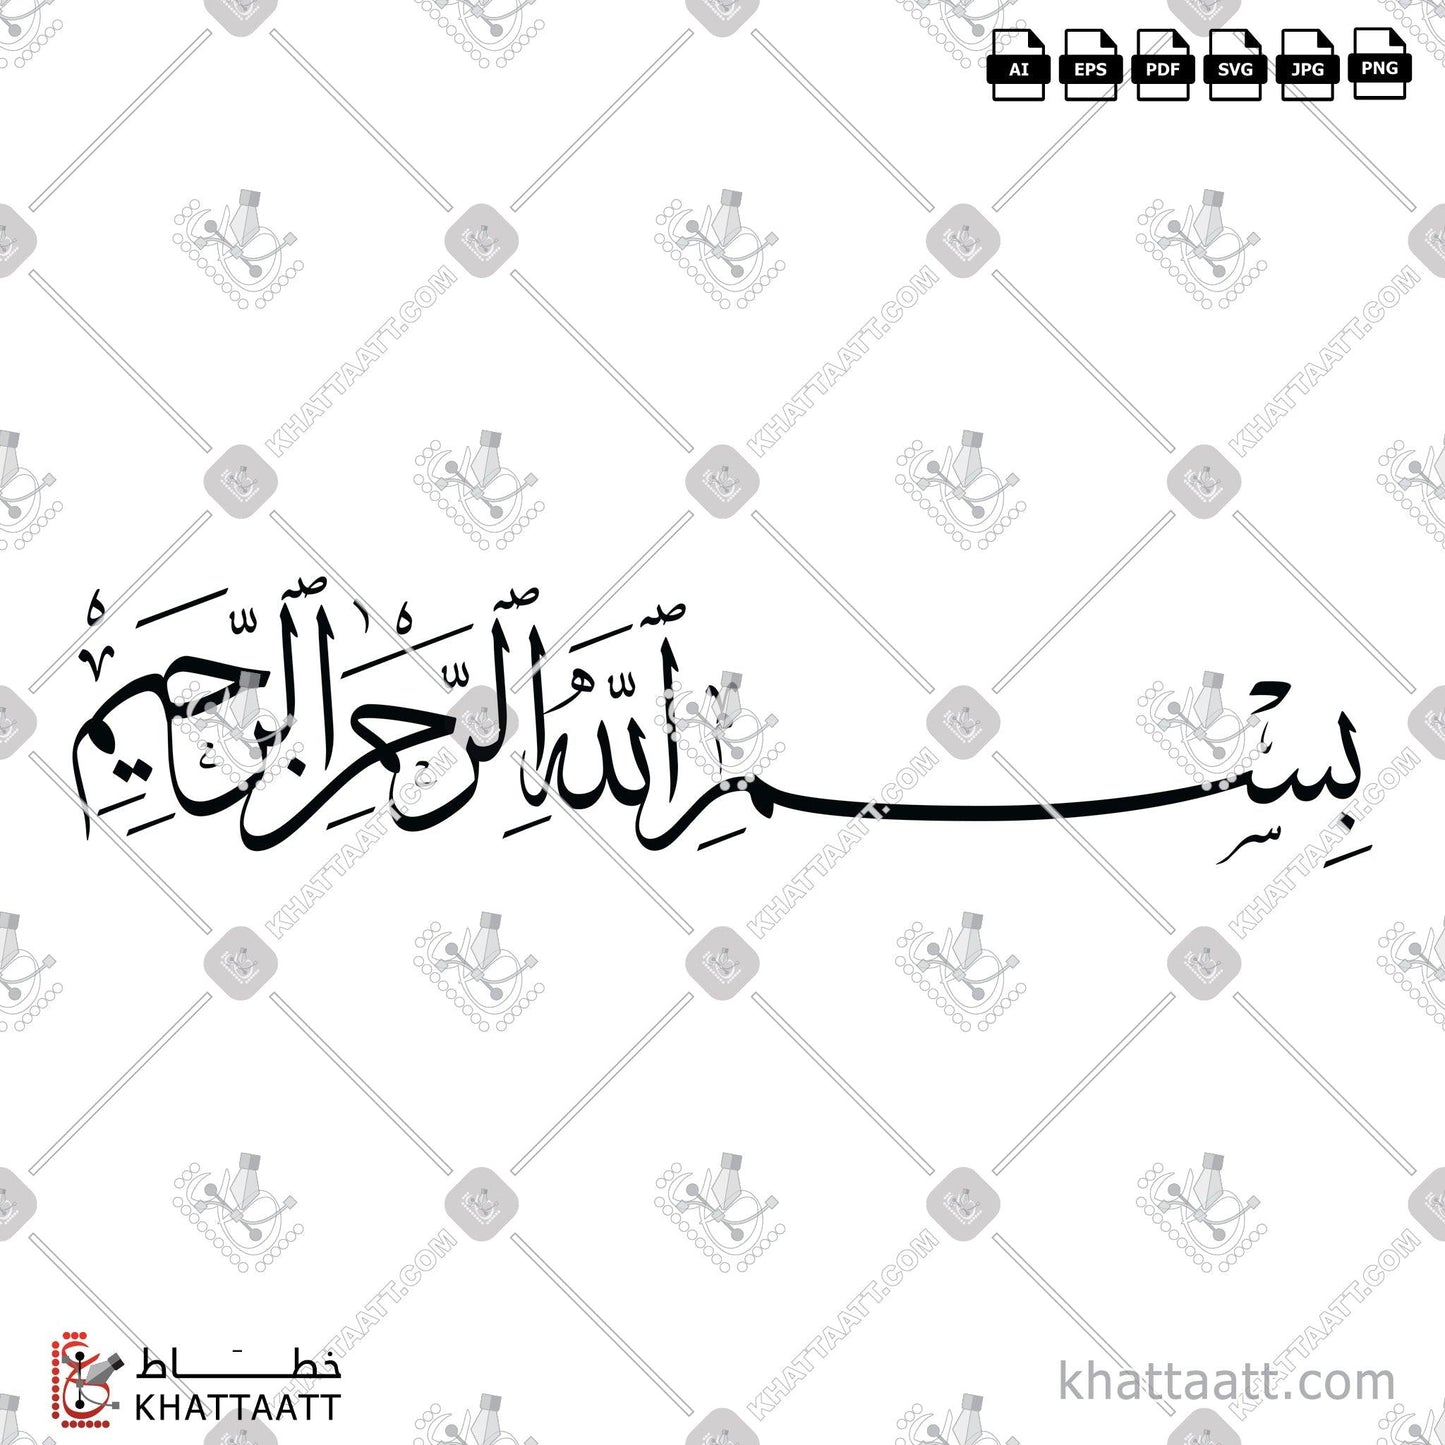 Download Arabic Calligraphy of بسم الله الرحمن الرحيم in Thuluth - خط الثلث in vector and .png